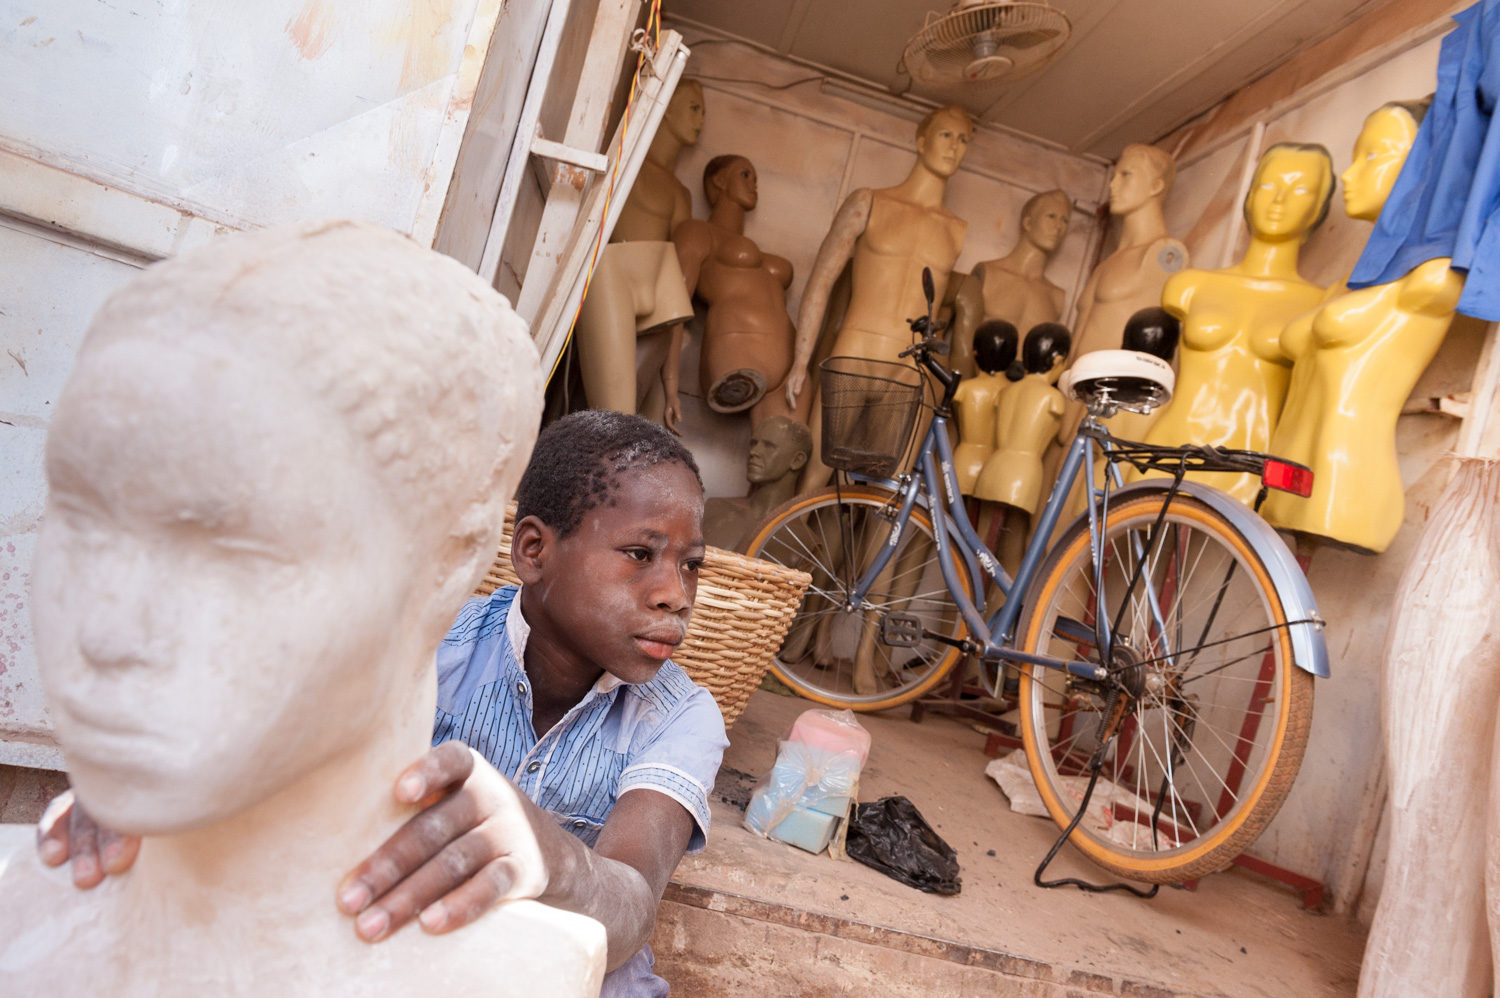 Mannequin fabrication shop - Ouagadougou, Burkina Faso